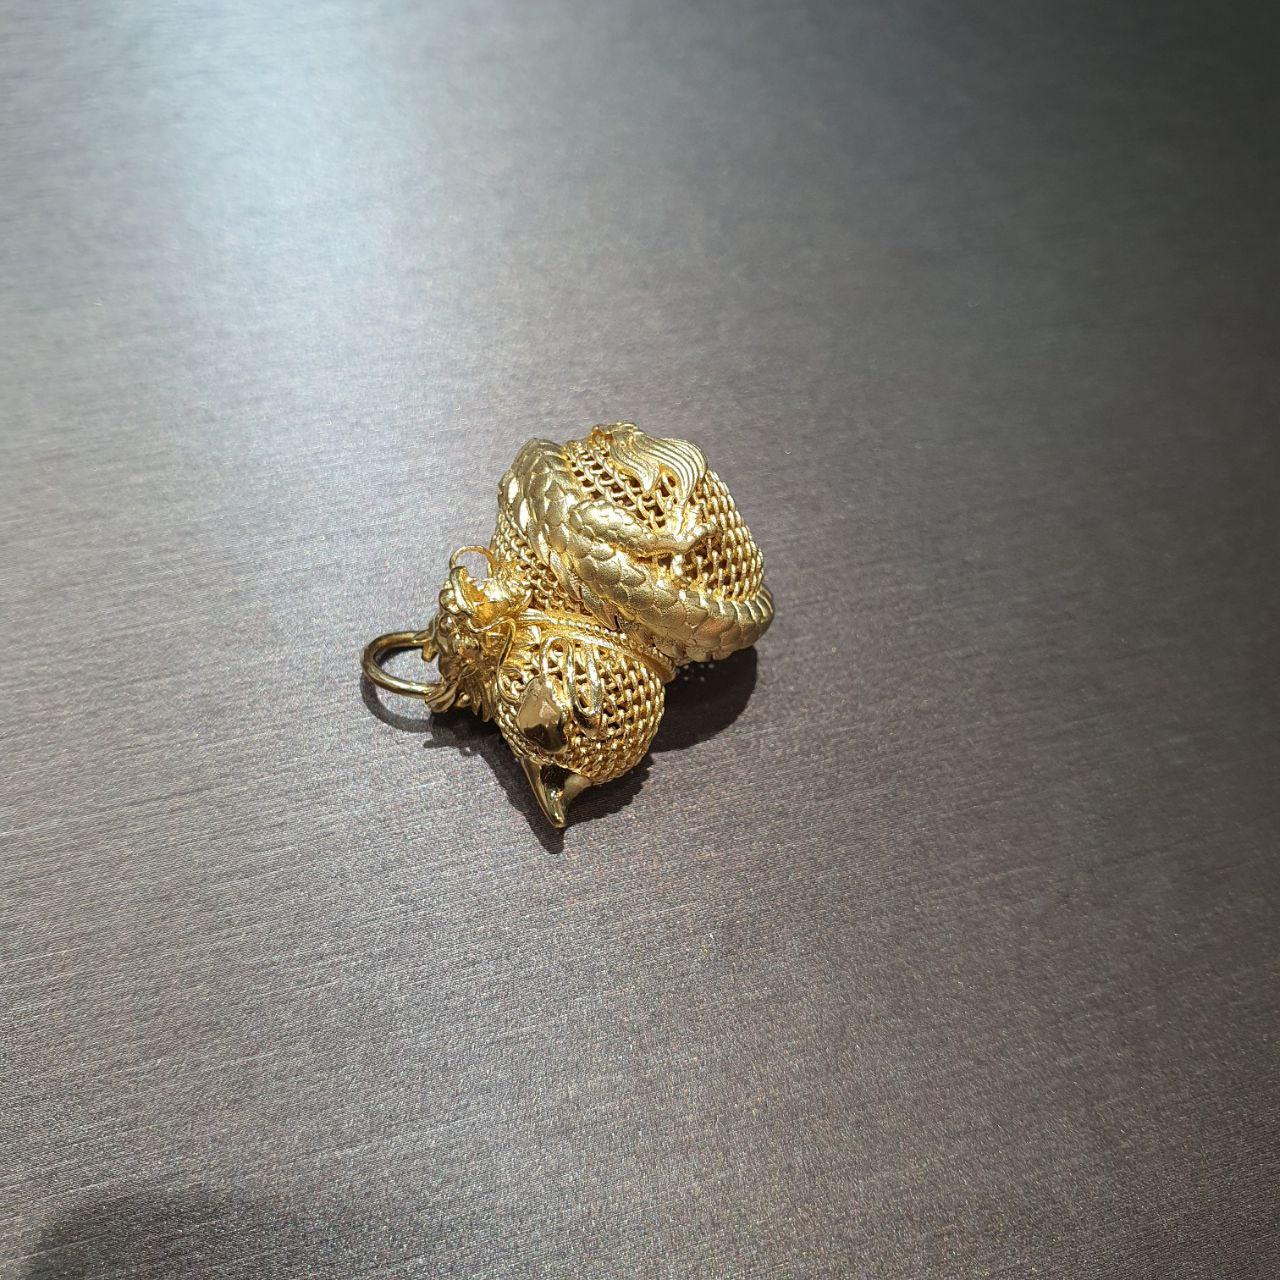 22K / 916 Gold Dragon Hulu Pendant nice finish-Charms & Pendants-Best Gold Shop